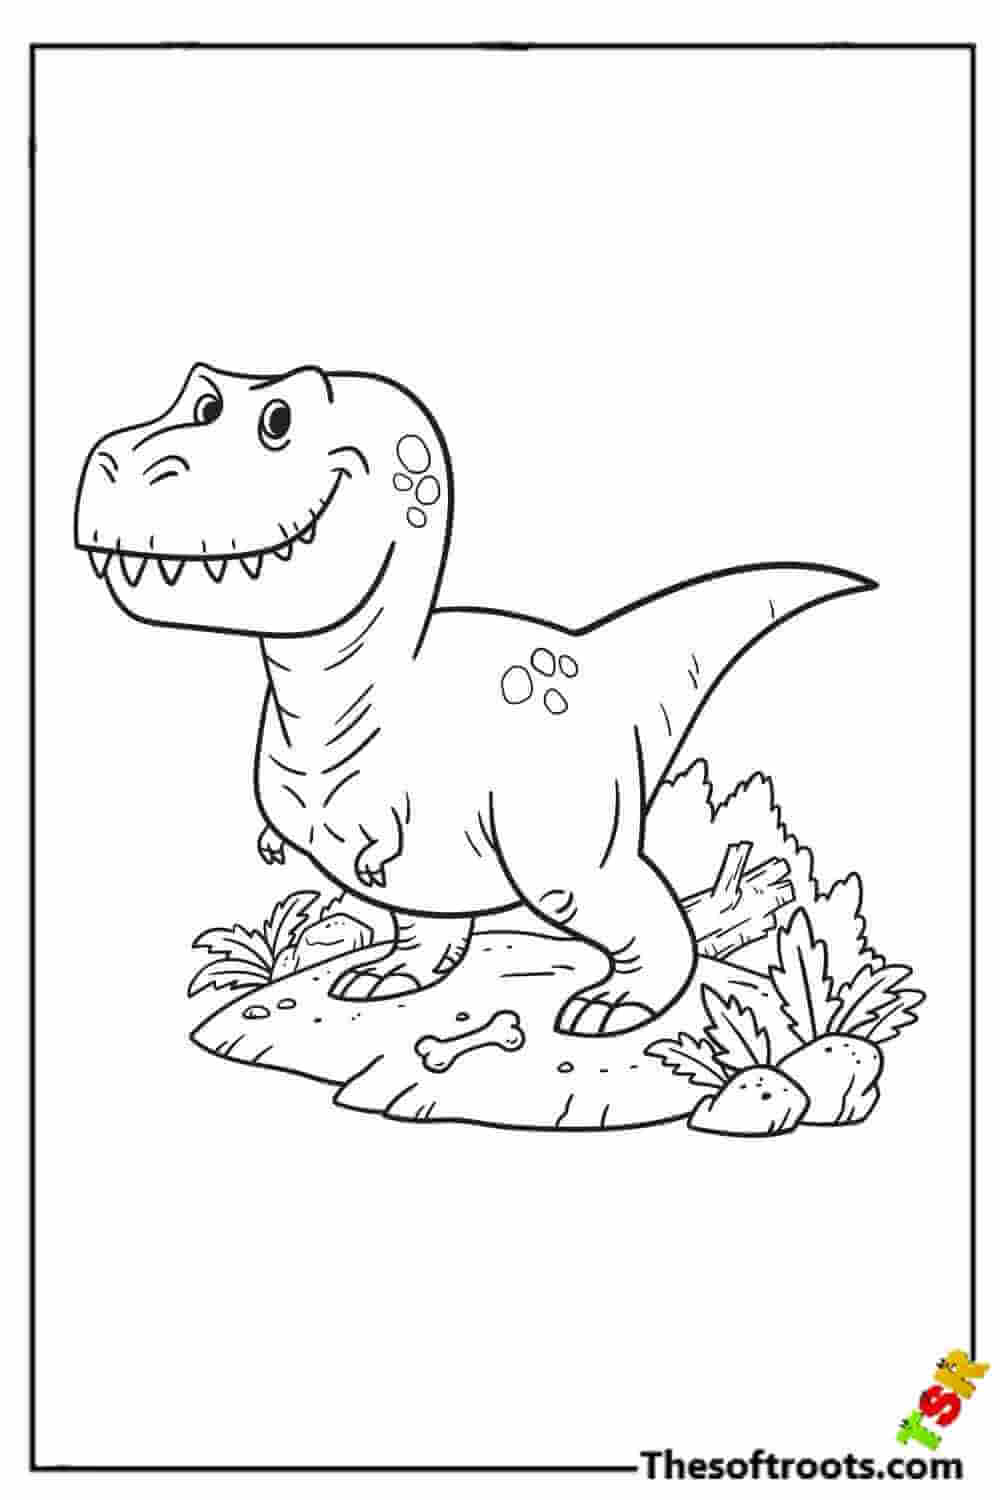 Happy T-Rex coloring pages